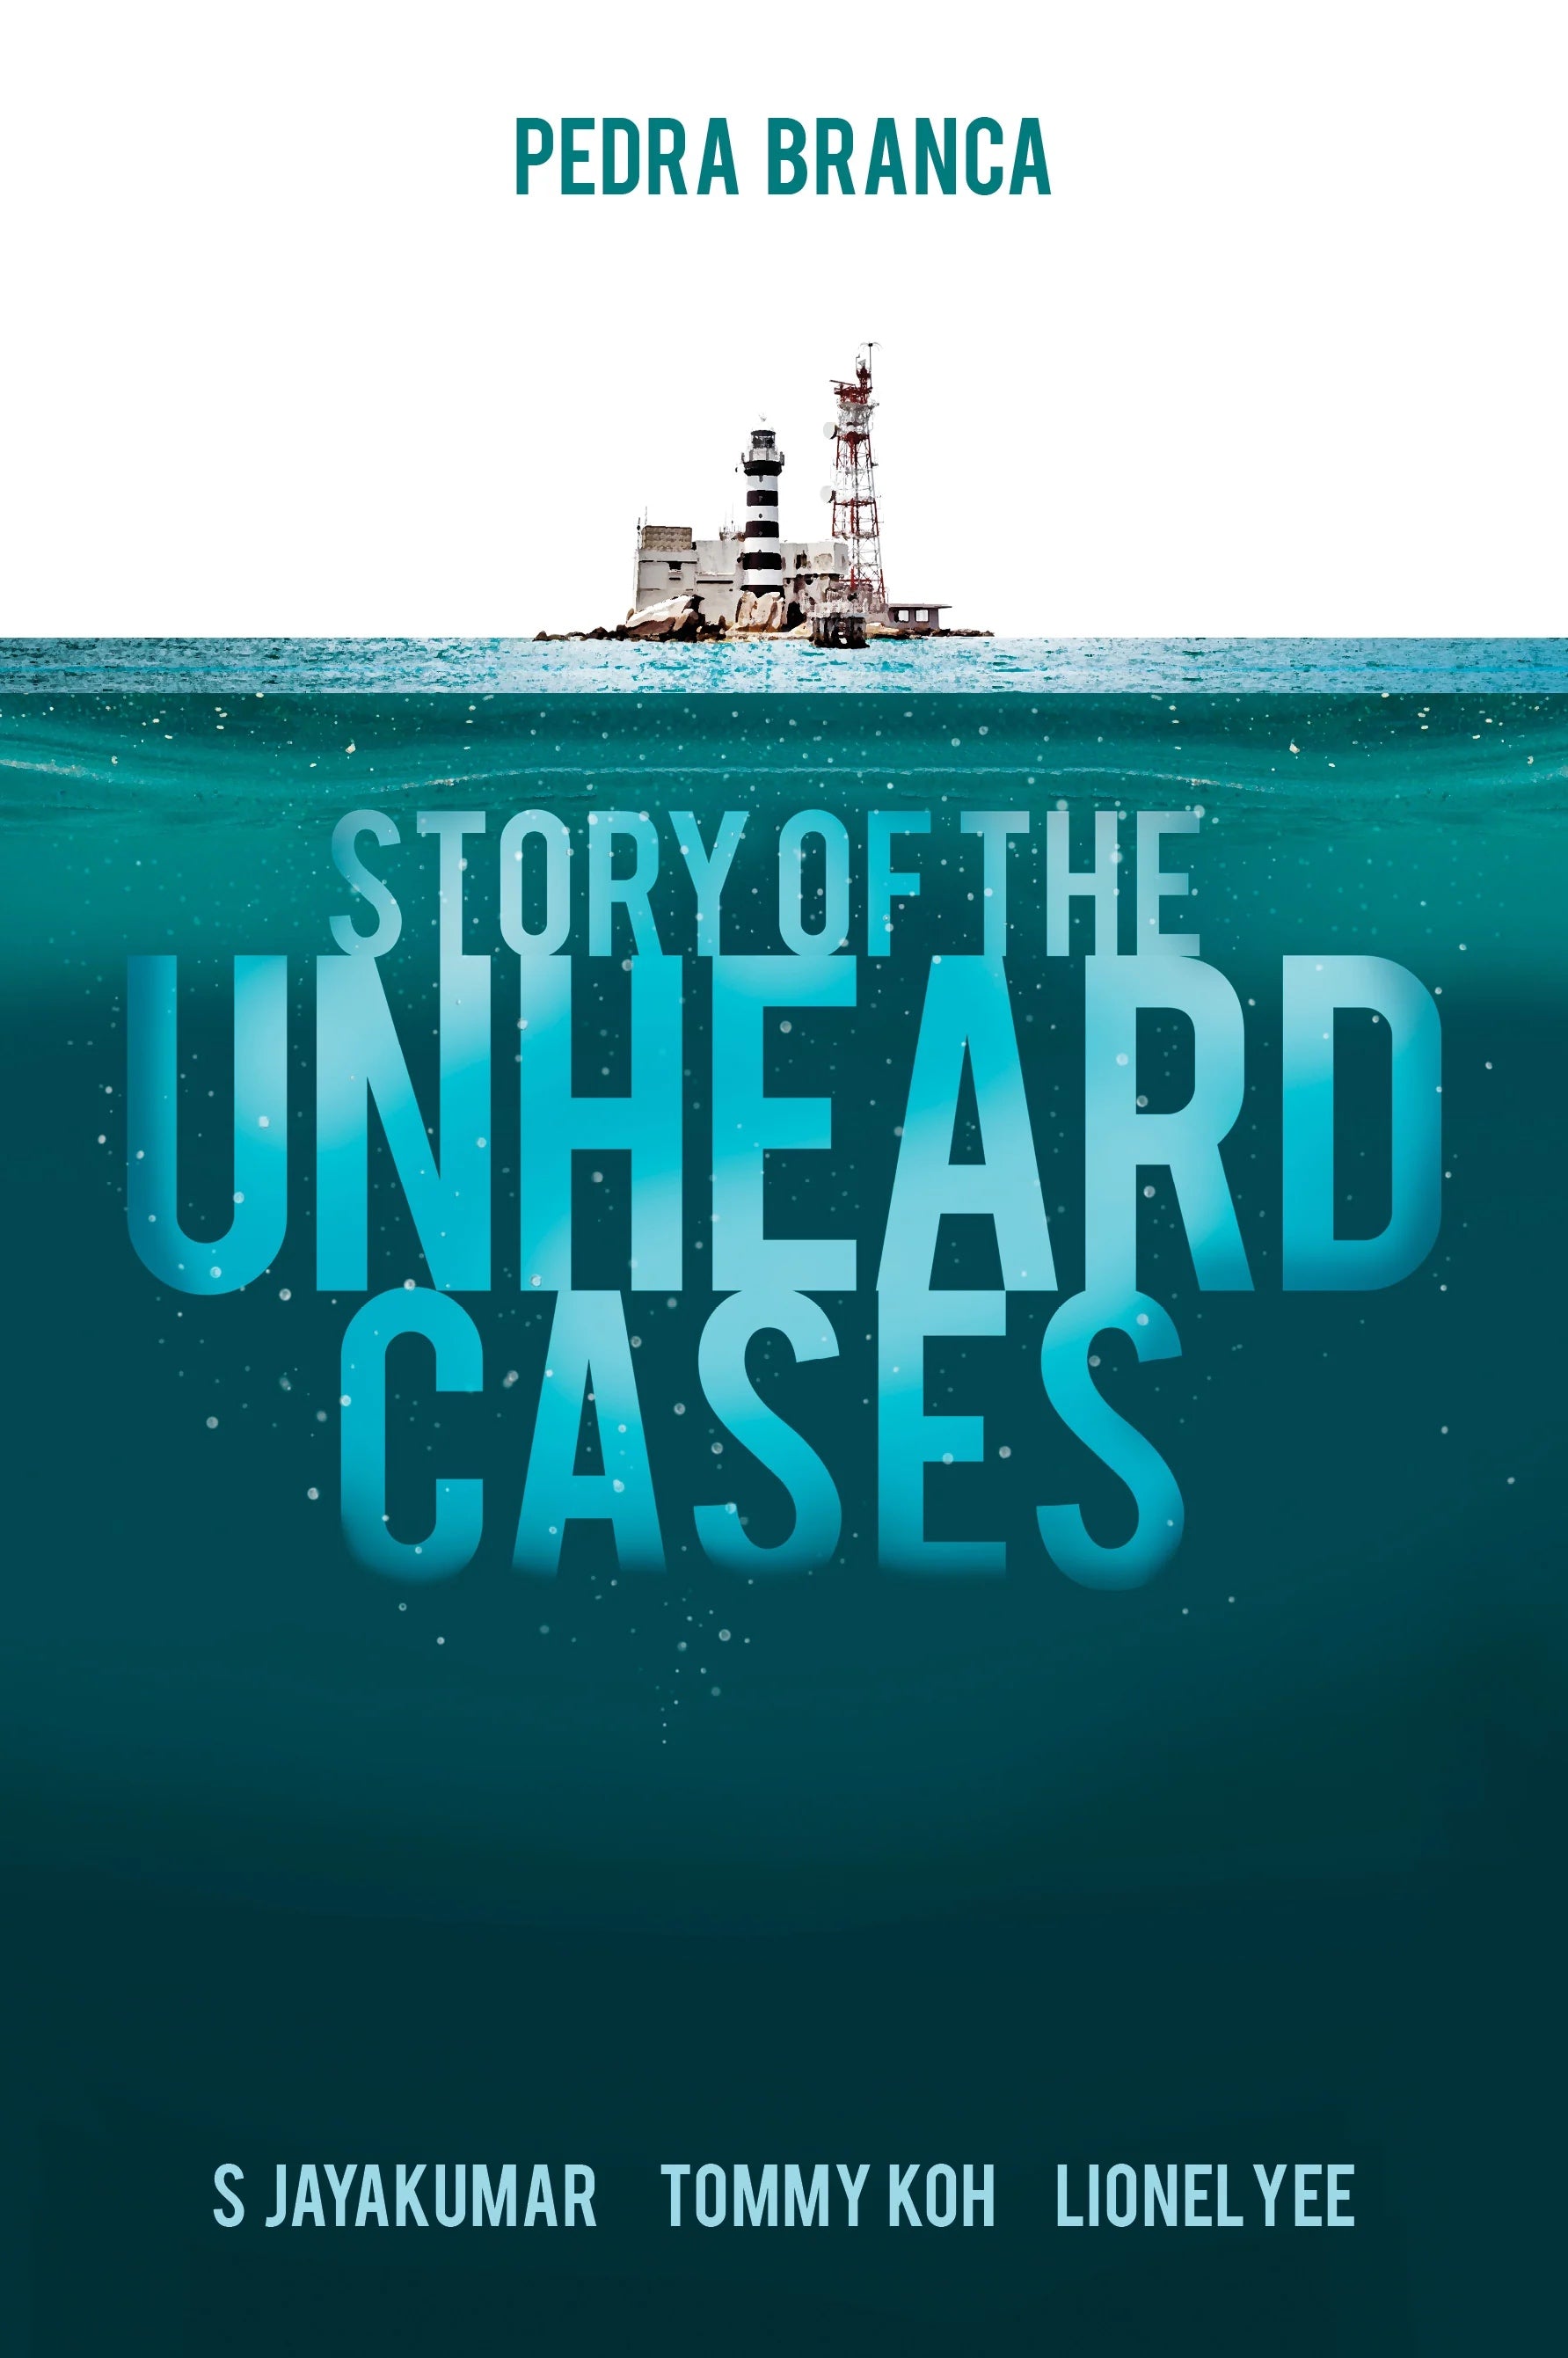 Pedra Branca: Story of the Unheard Cases